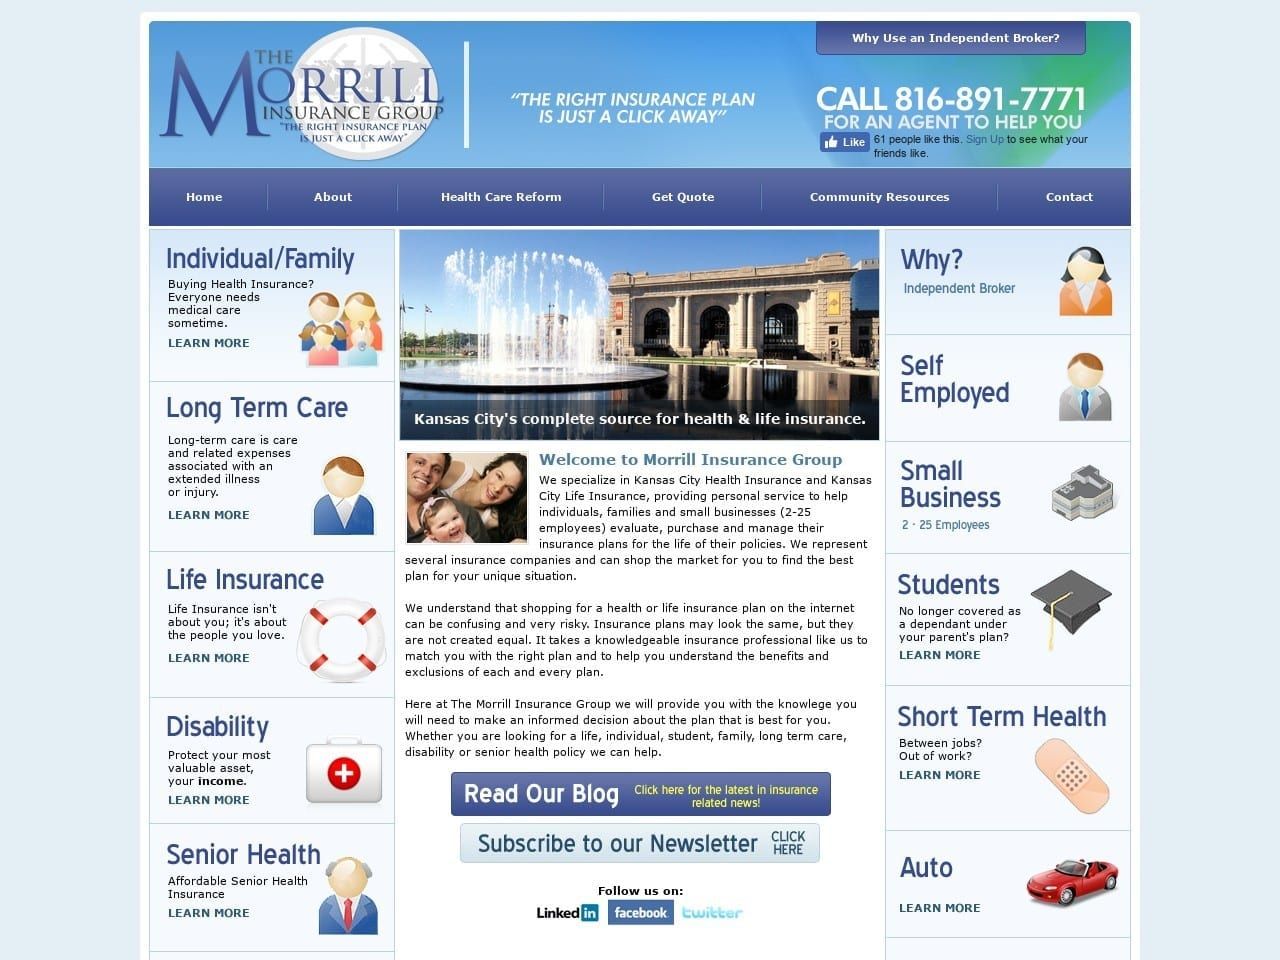 Morrill Insurance Group Website Screenshot from morrillinsurancegroup.com